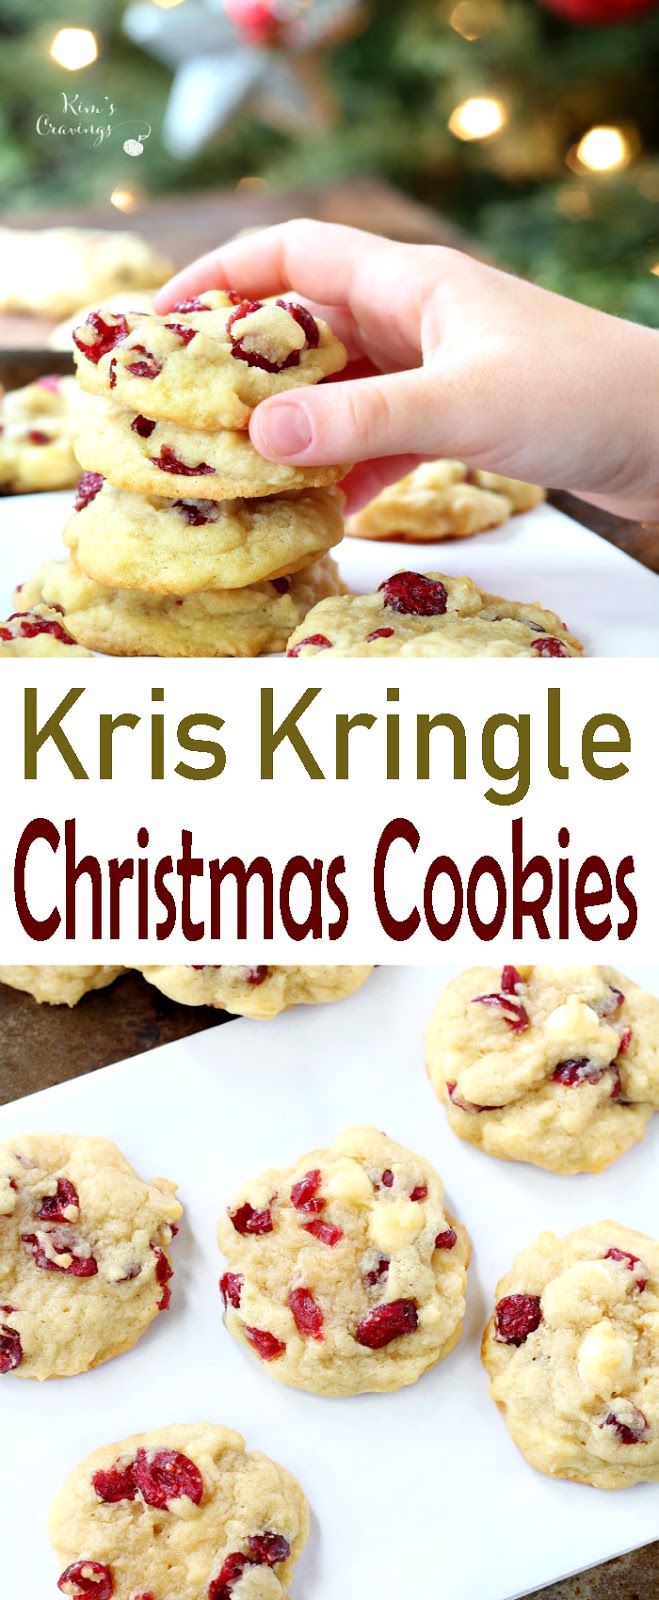 Easy to Make Kringle Christmas Cookies